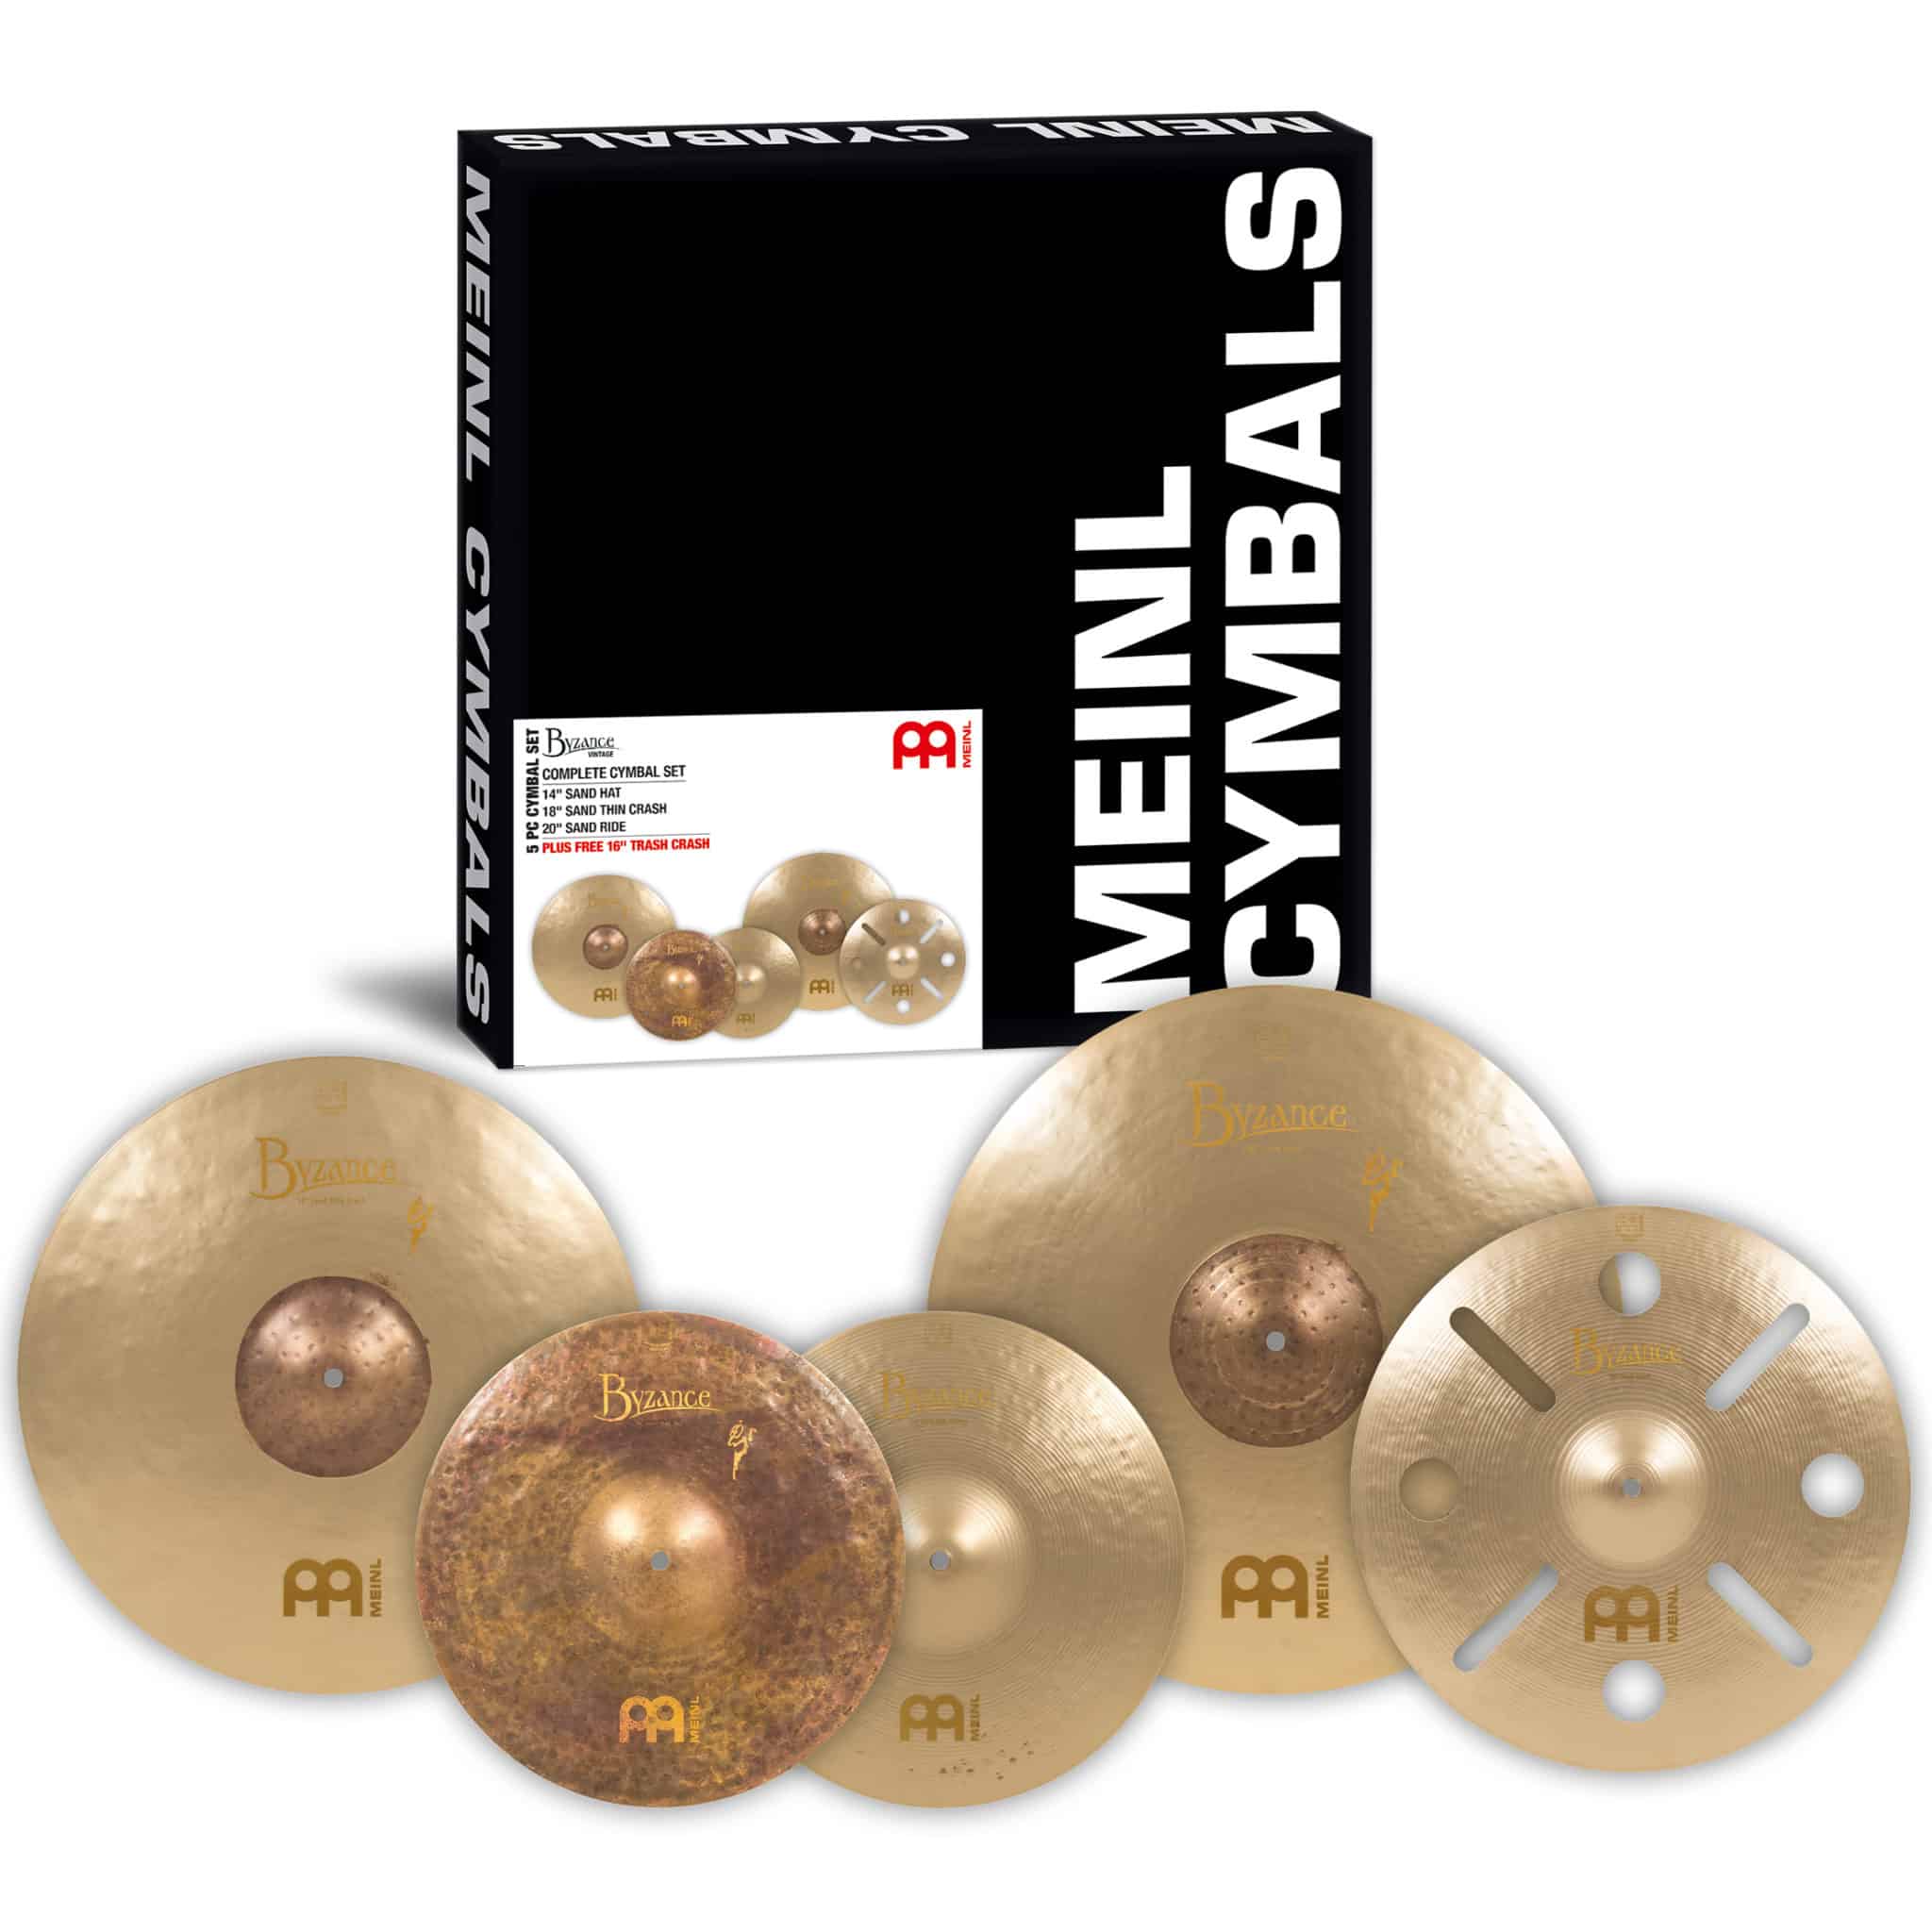 Meinl Byzance Vintage Sand Bonus Cymbal Set – Benny Greb Signature Cymbal Set 4